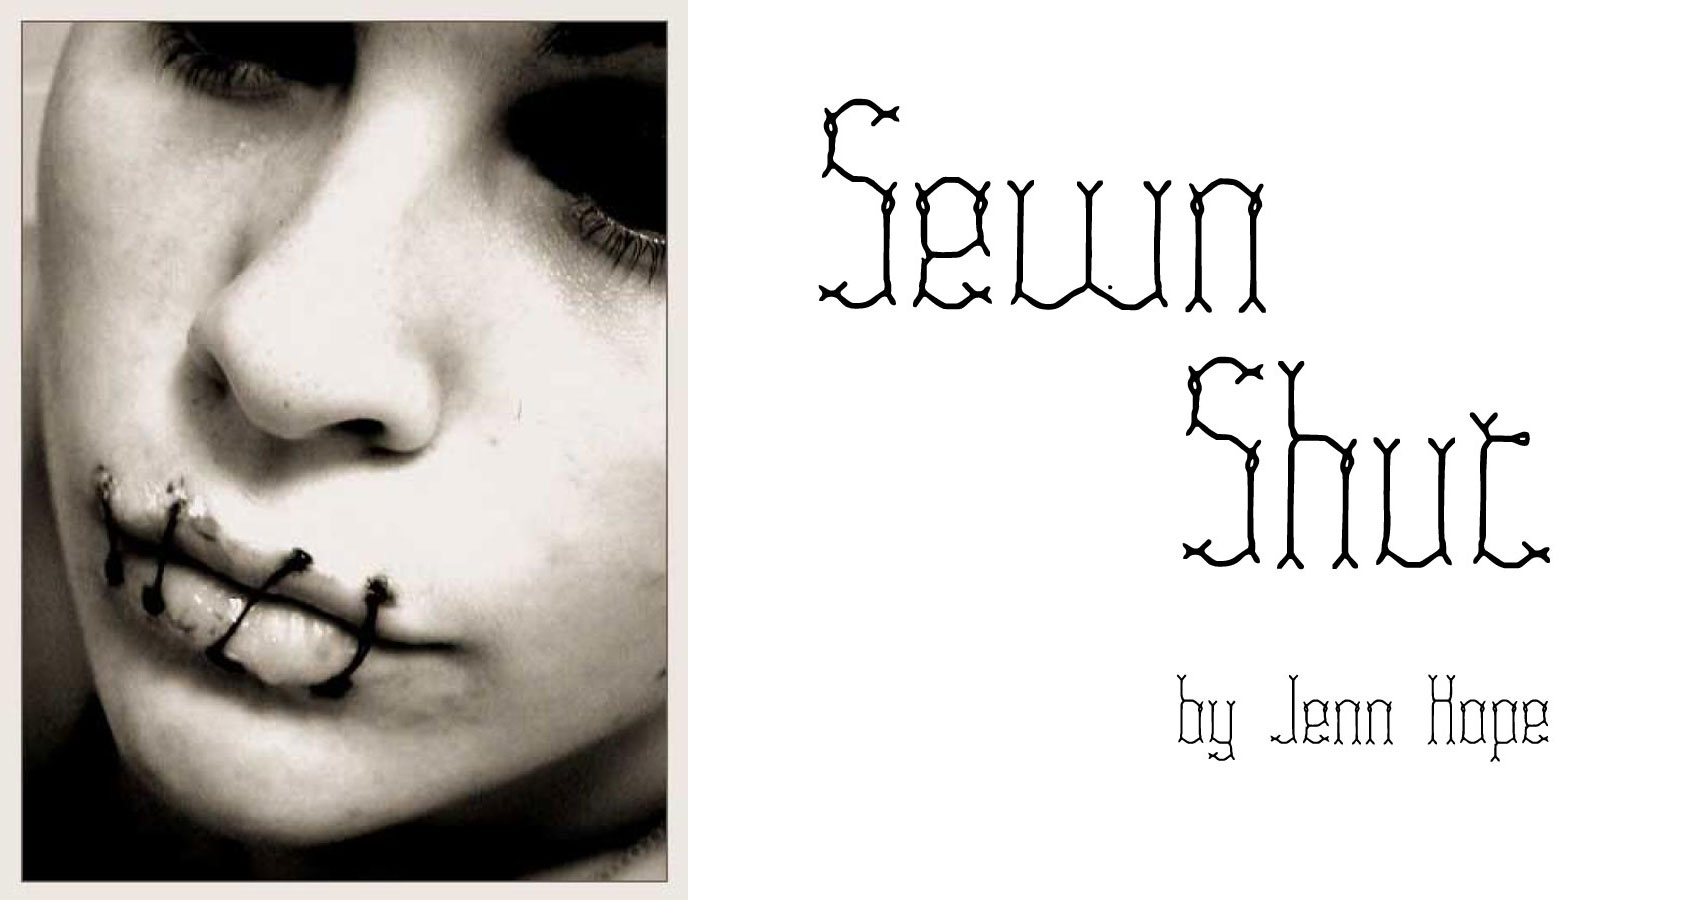 Sewn Shut written by Jenn Hope at Spillwords.com